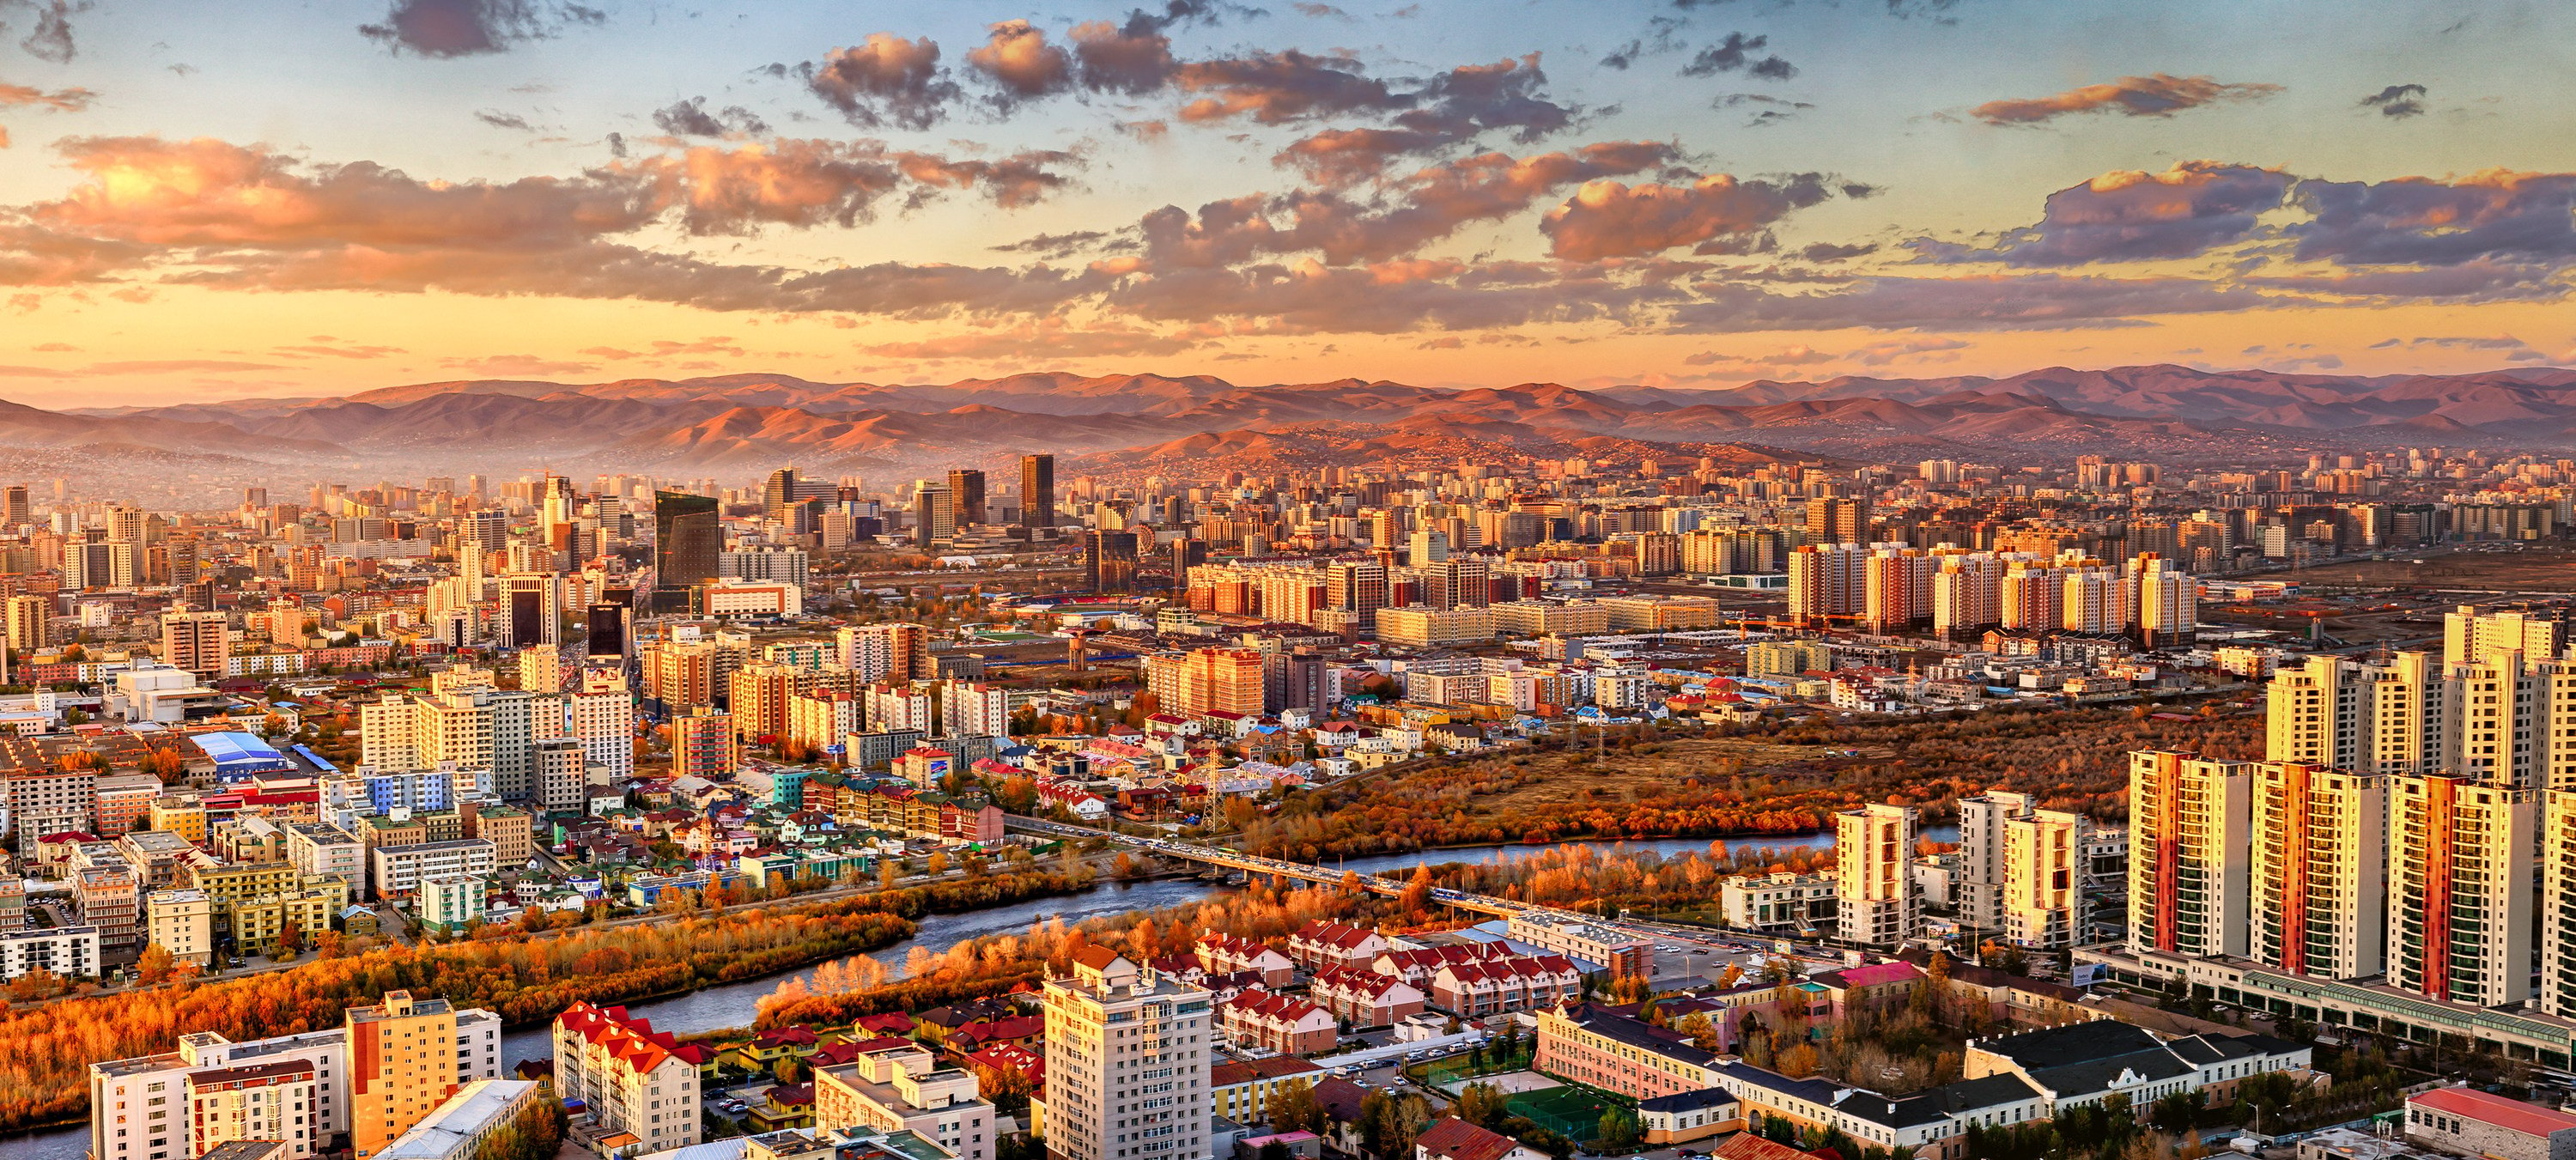 A view of Ulaanbaatar, Mongolia’s capital. Photo: Shutterstock